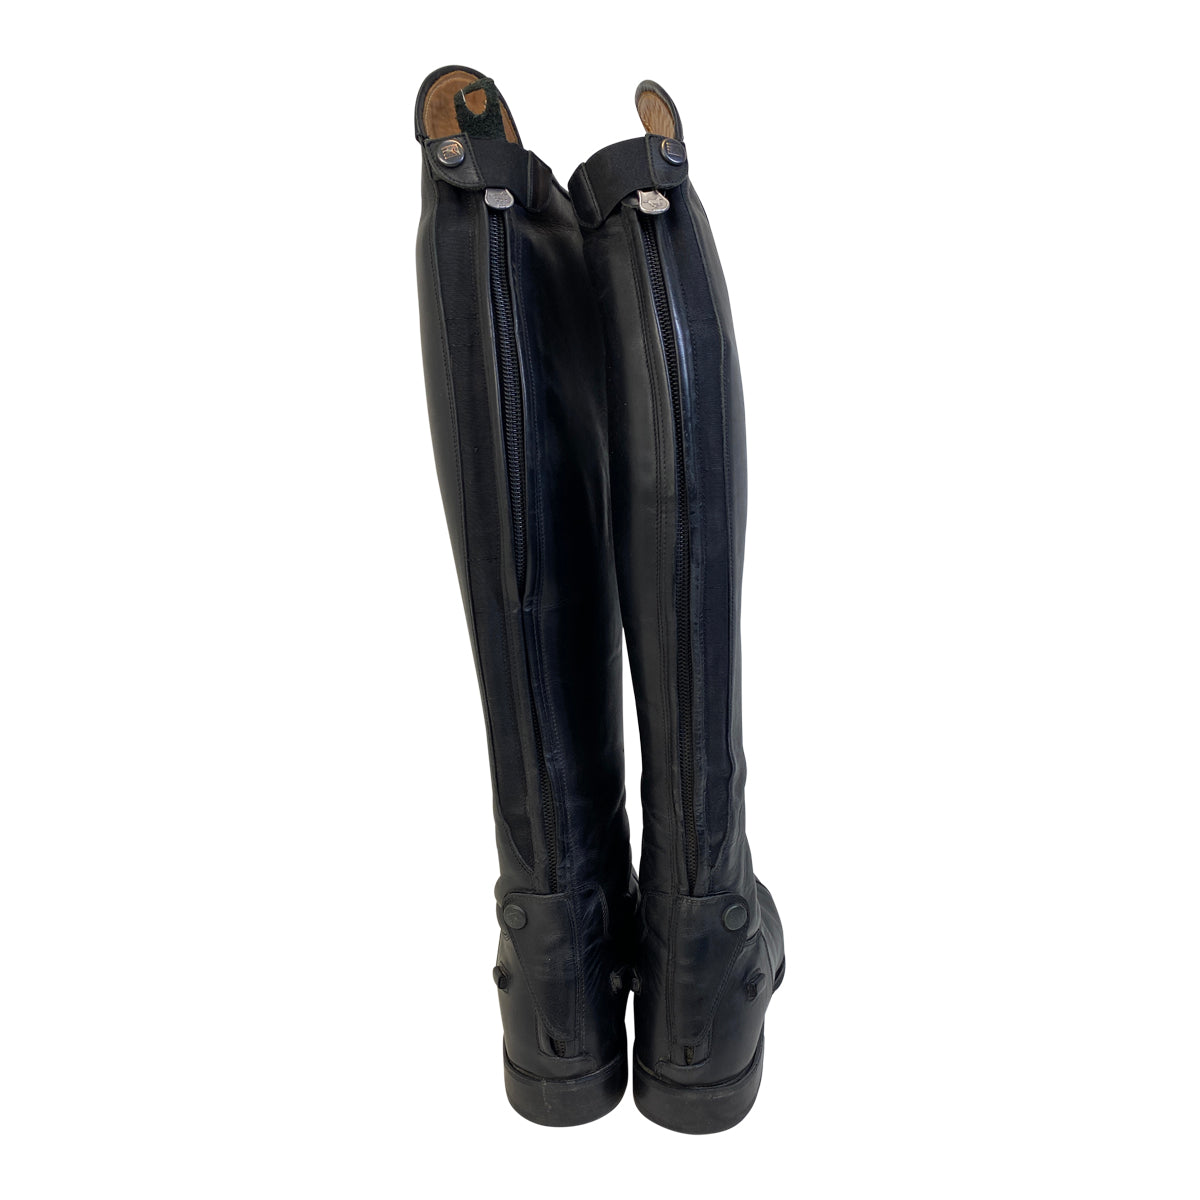 De Niro 'Salento' Field Boots in Black